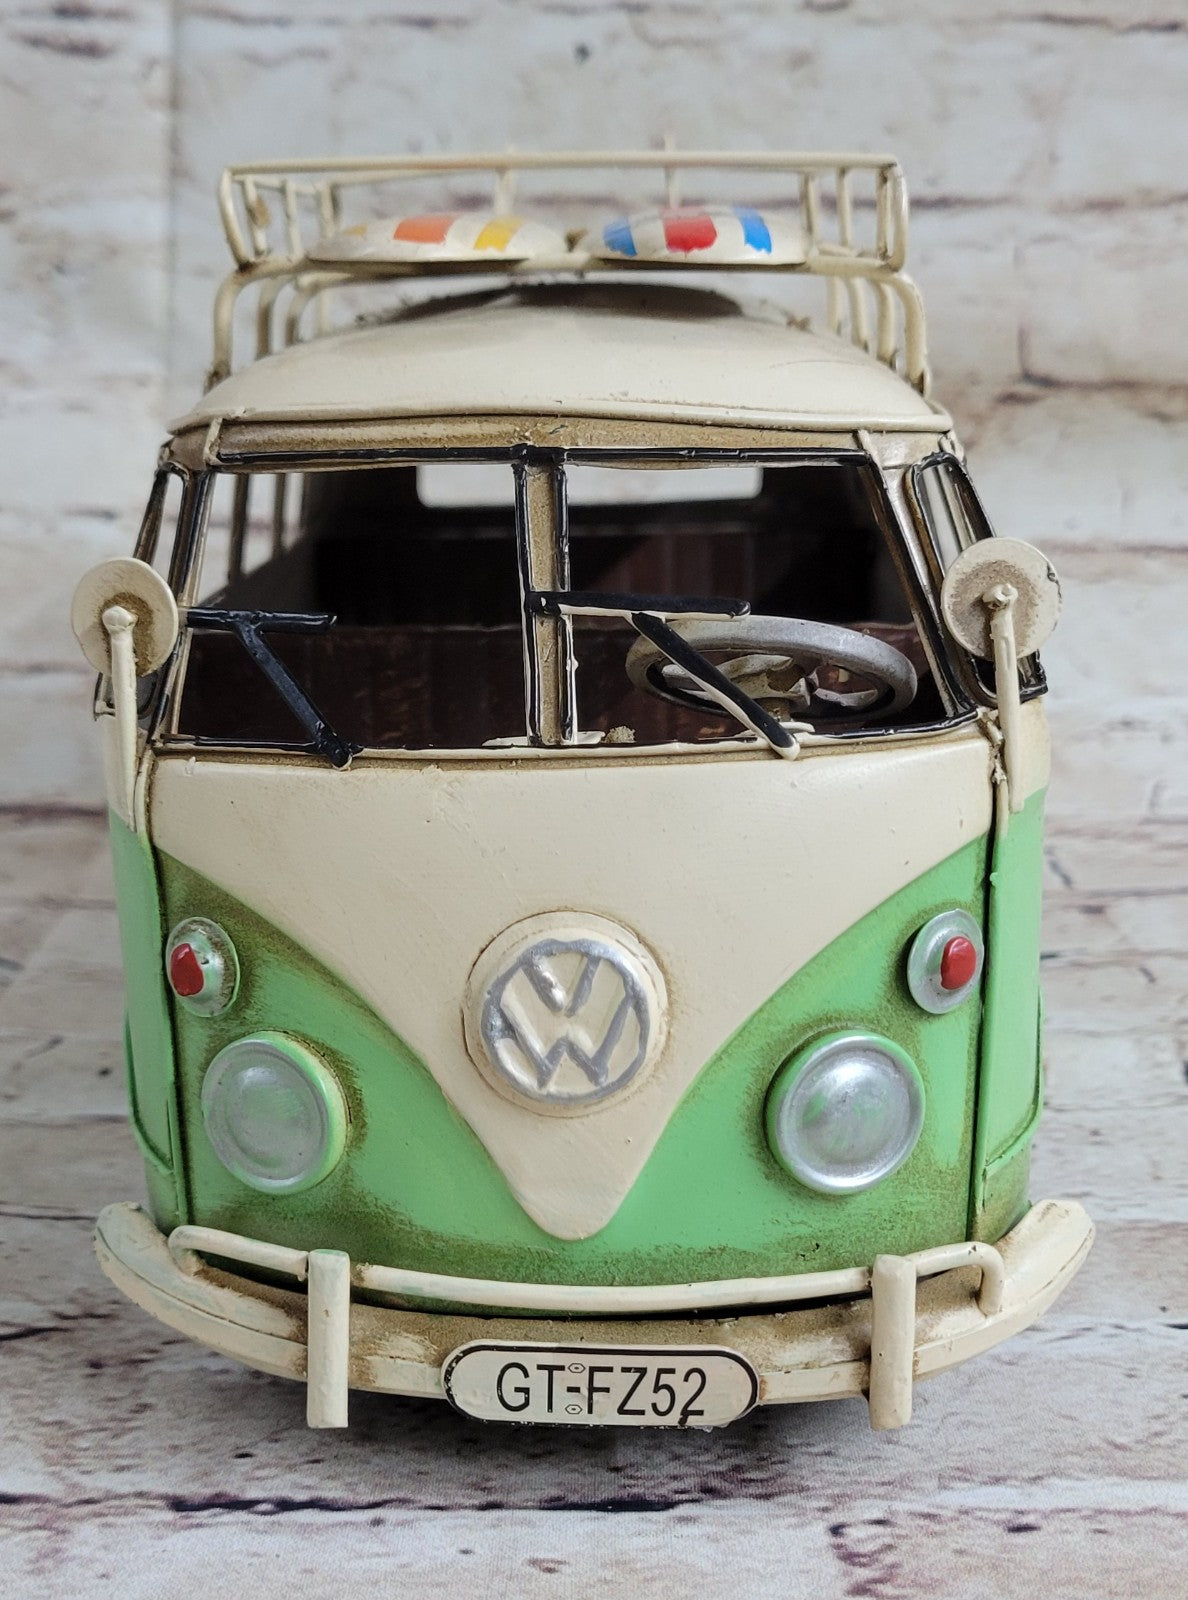 Collectible Collector Edition 1966 Volkswagen Mini Bus Tinplate Metal Artwork